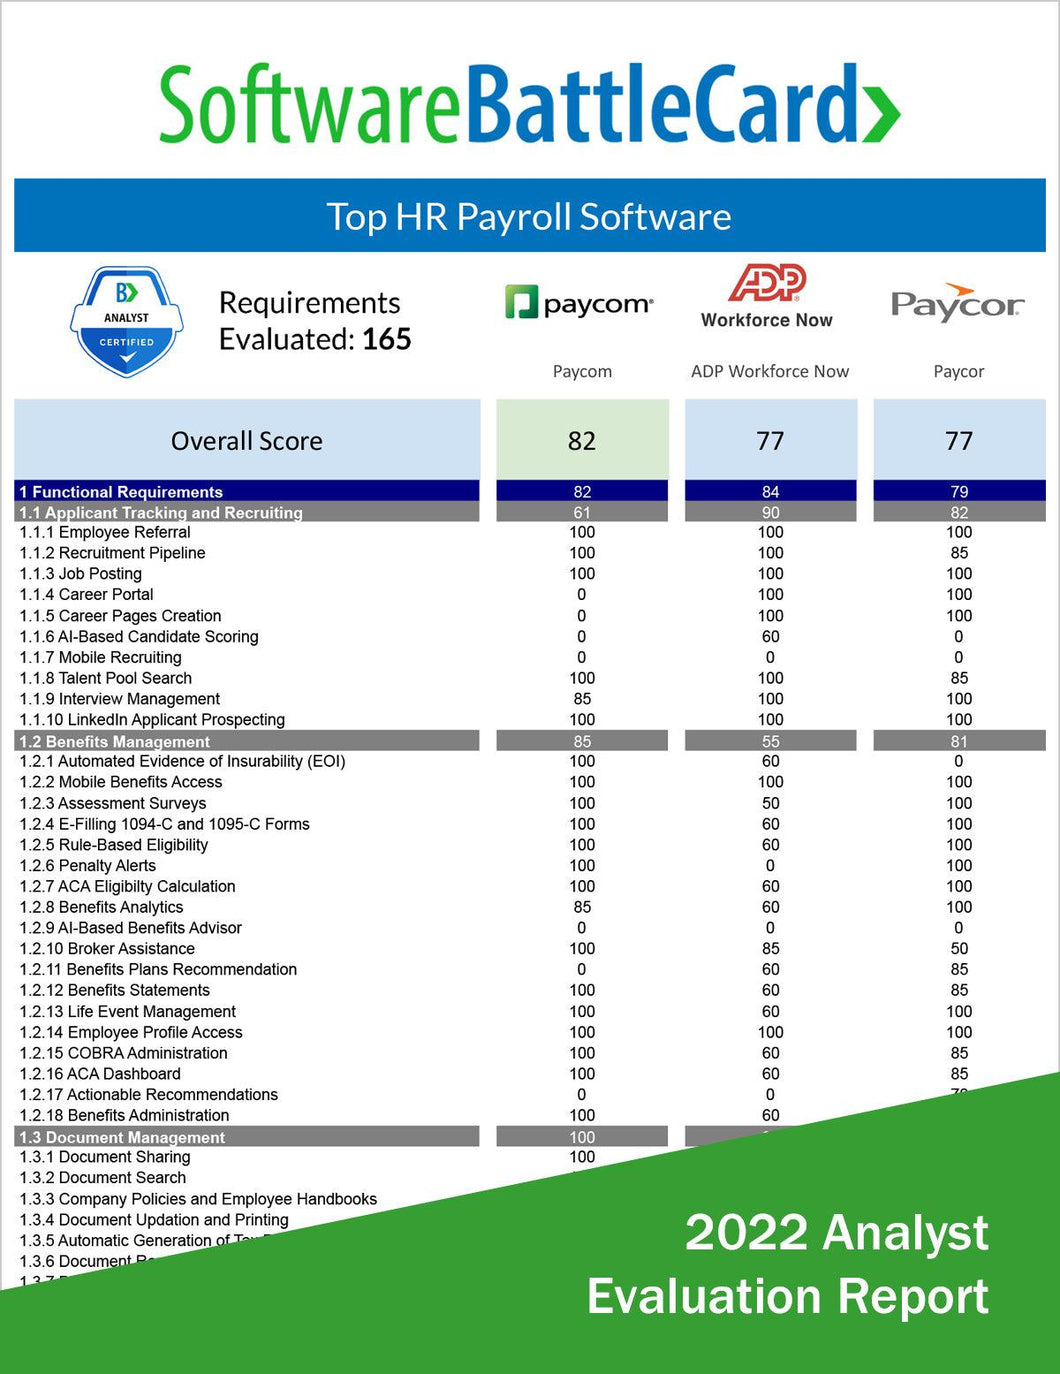 HR Payroll Software BattleCard: Paycom vs. ADP Workforce Now vs. Paycor